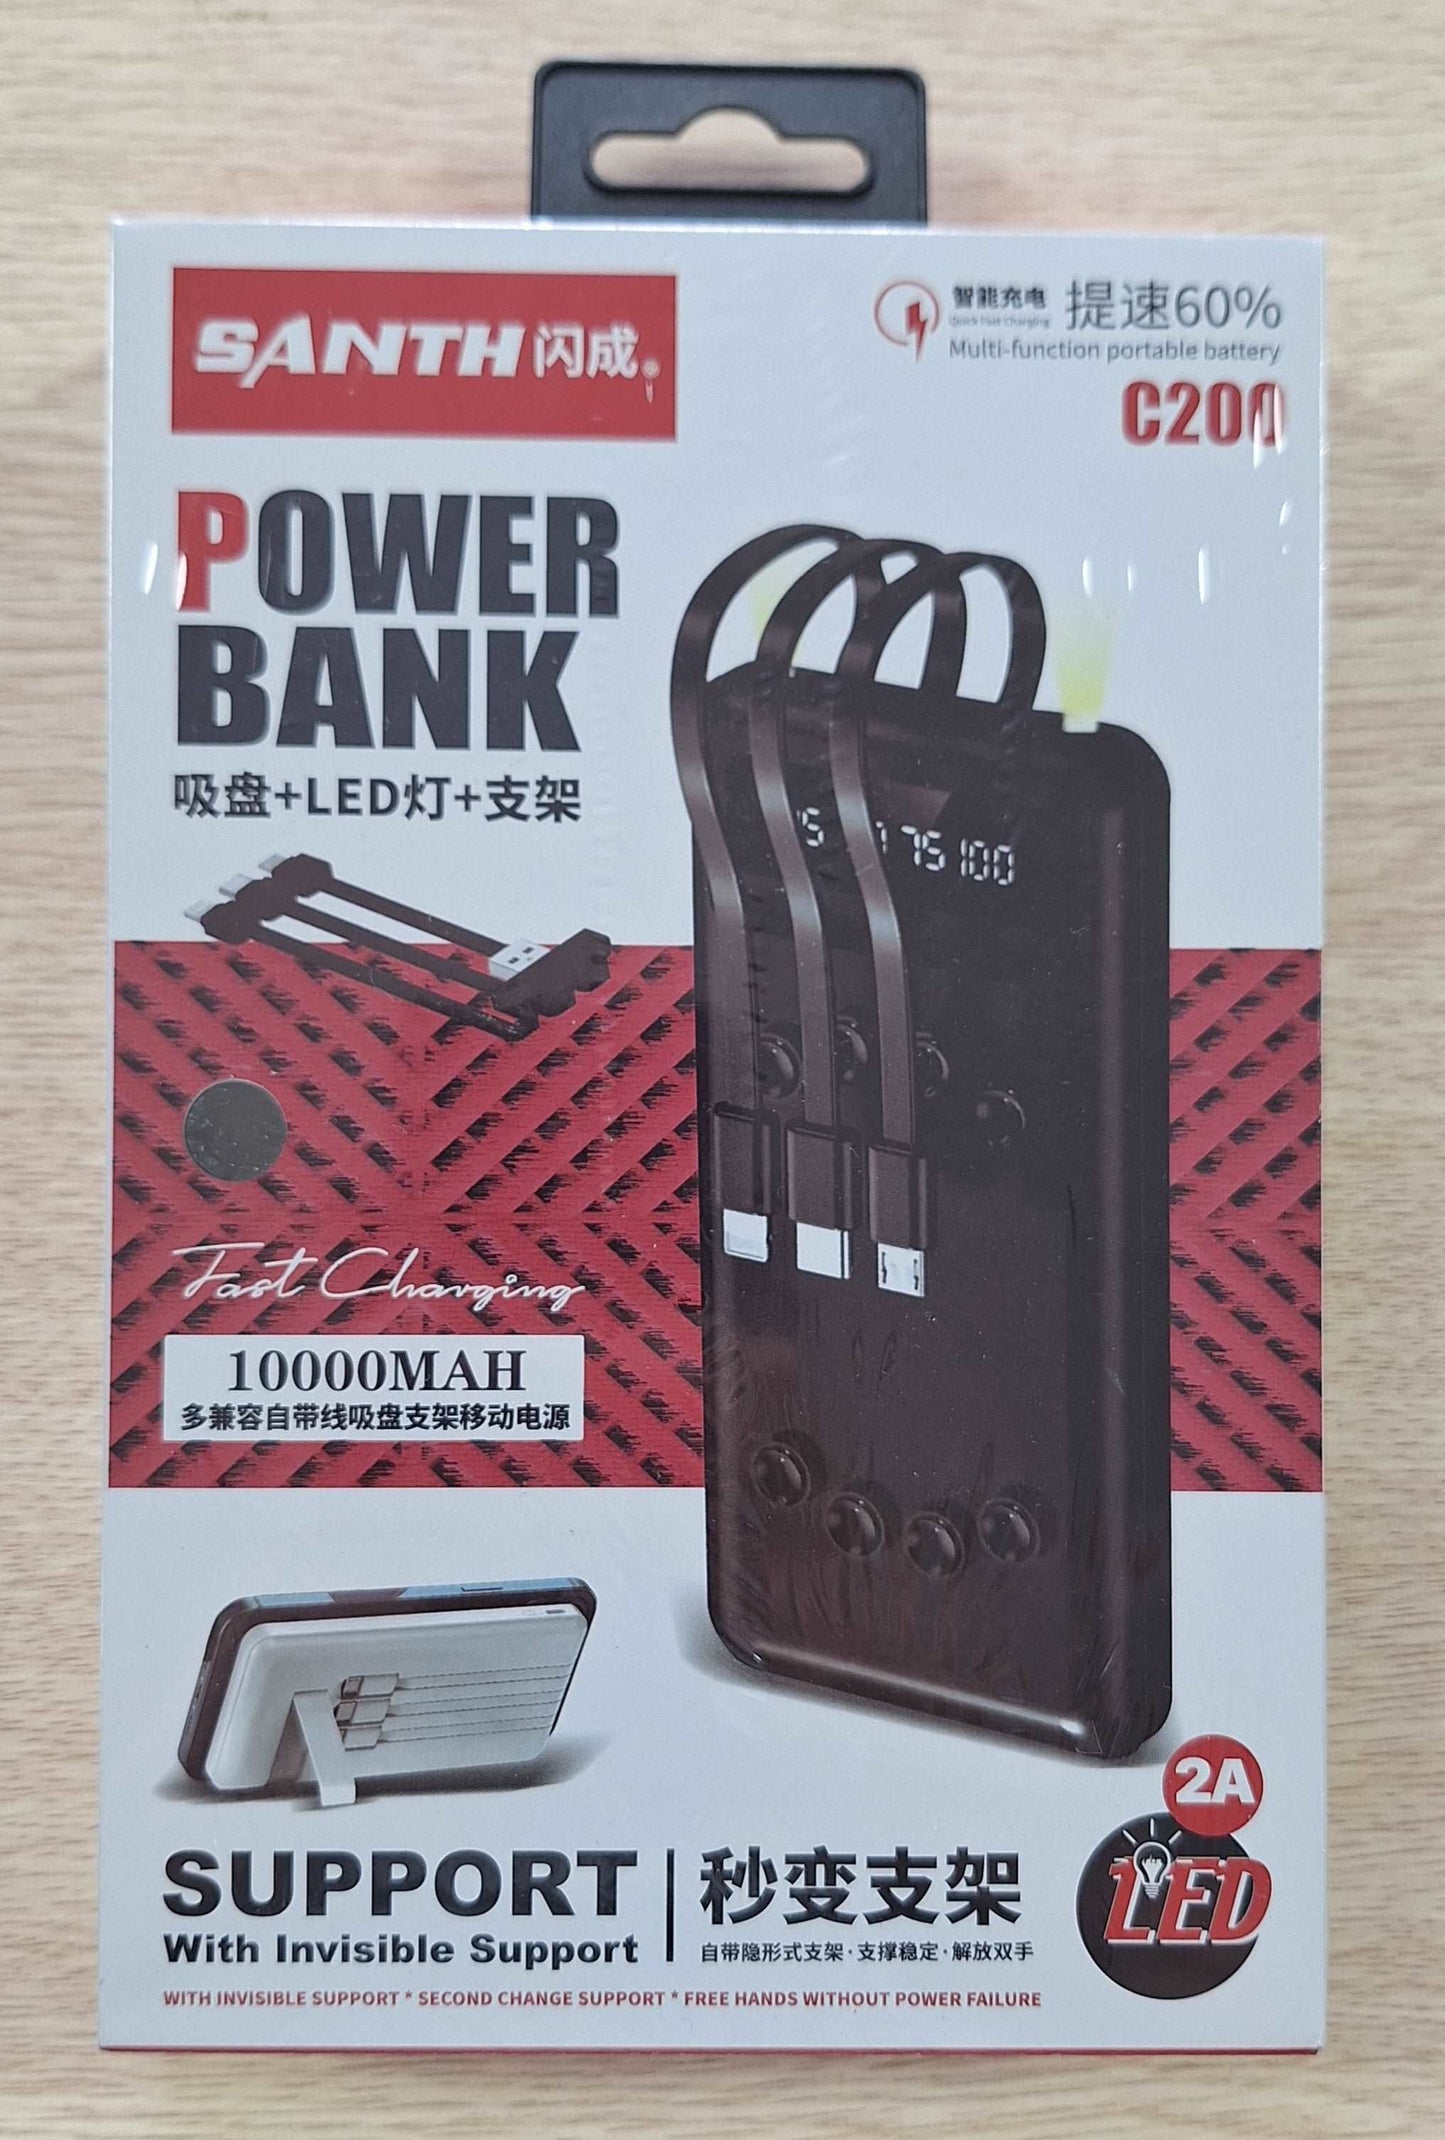 10000MAH 3 in 1 USB Multifunctional Power Bank